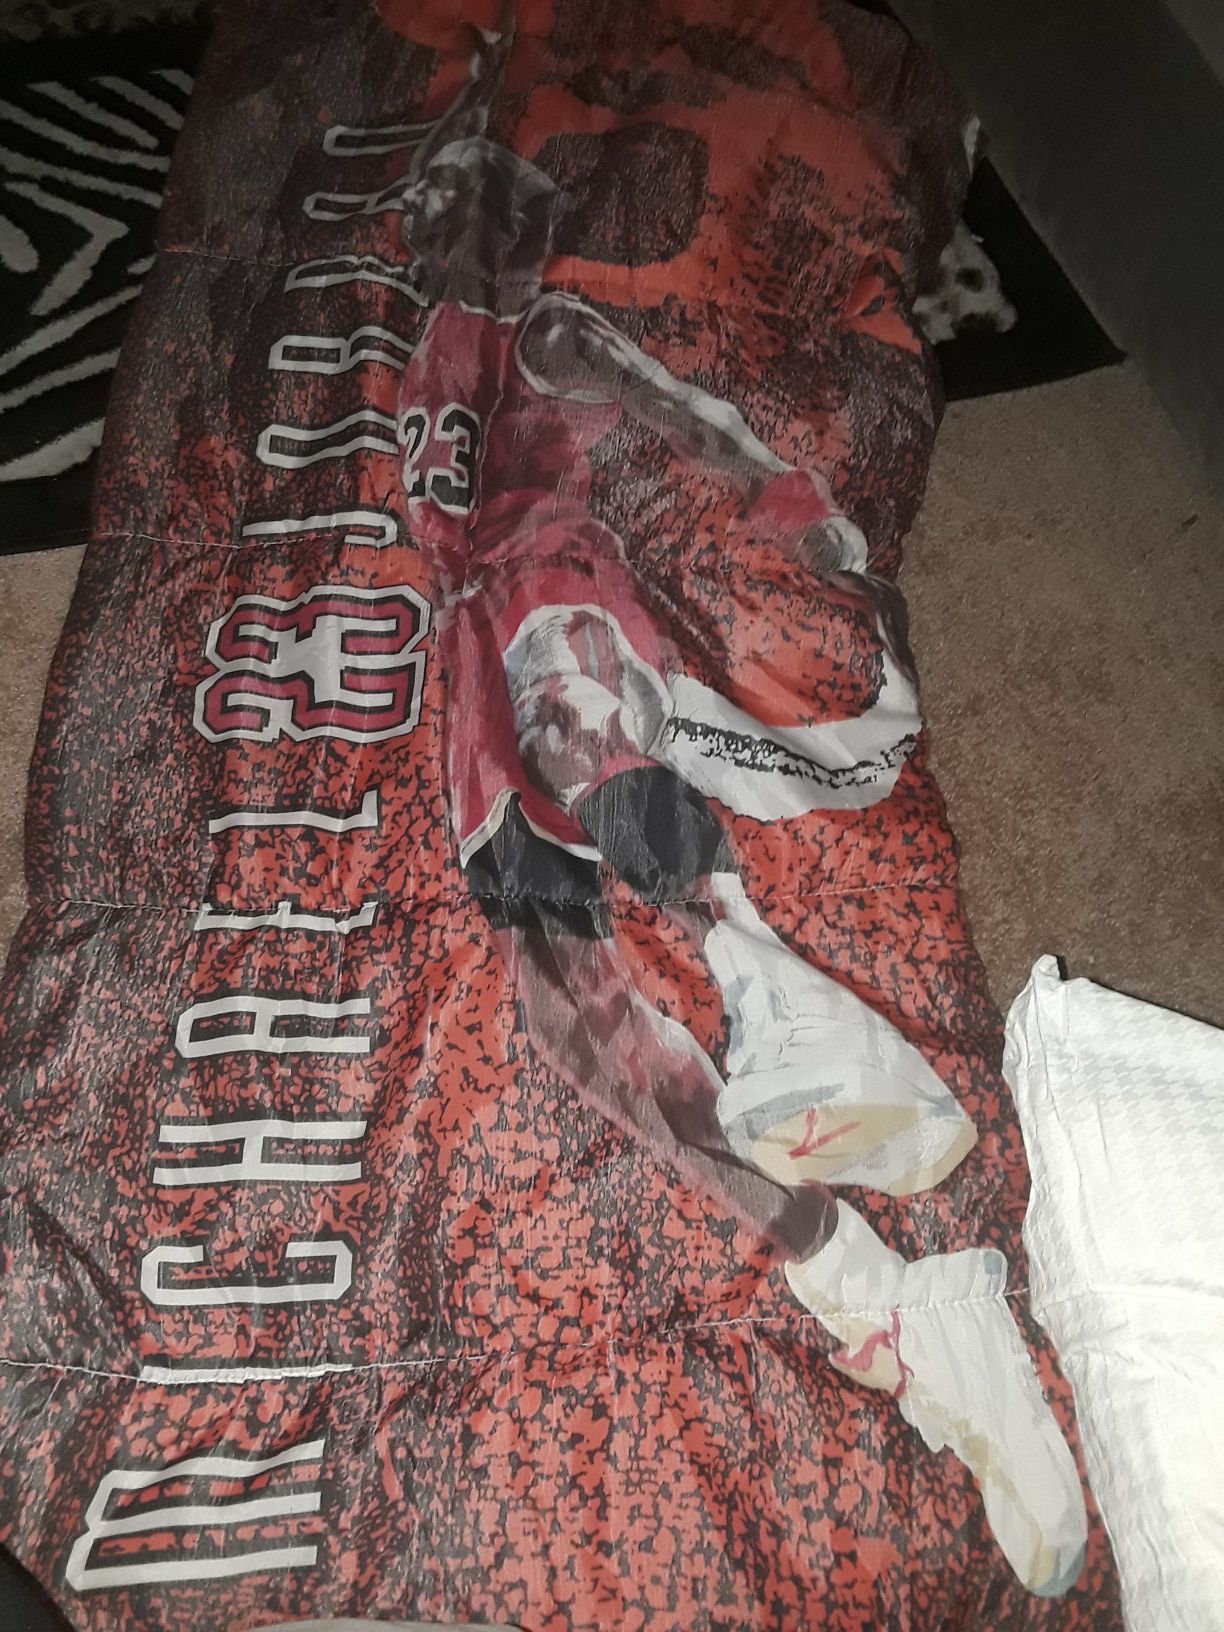 Michael Jordan sleeping bag